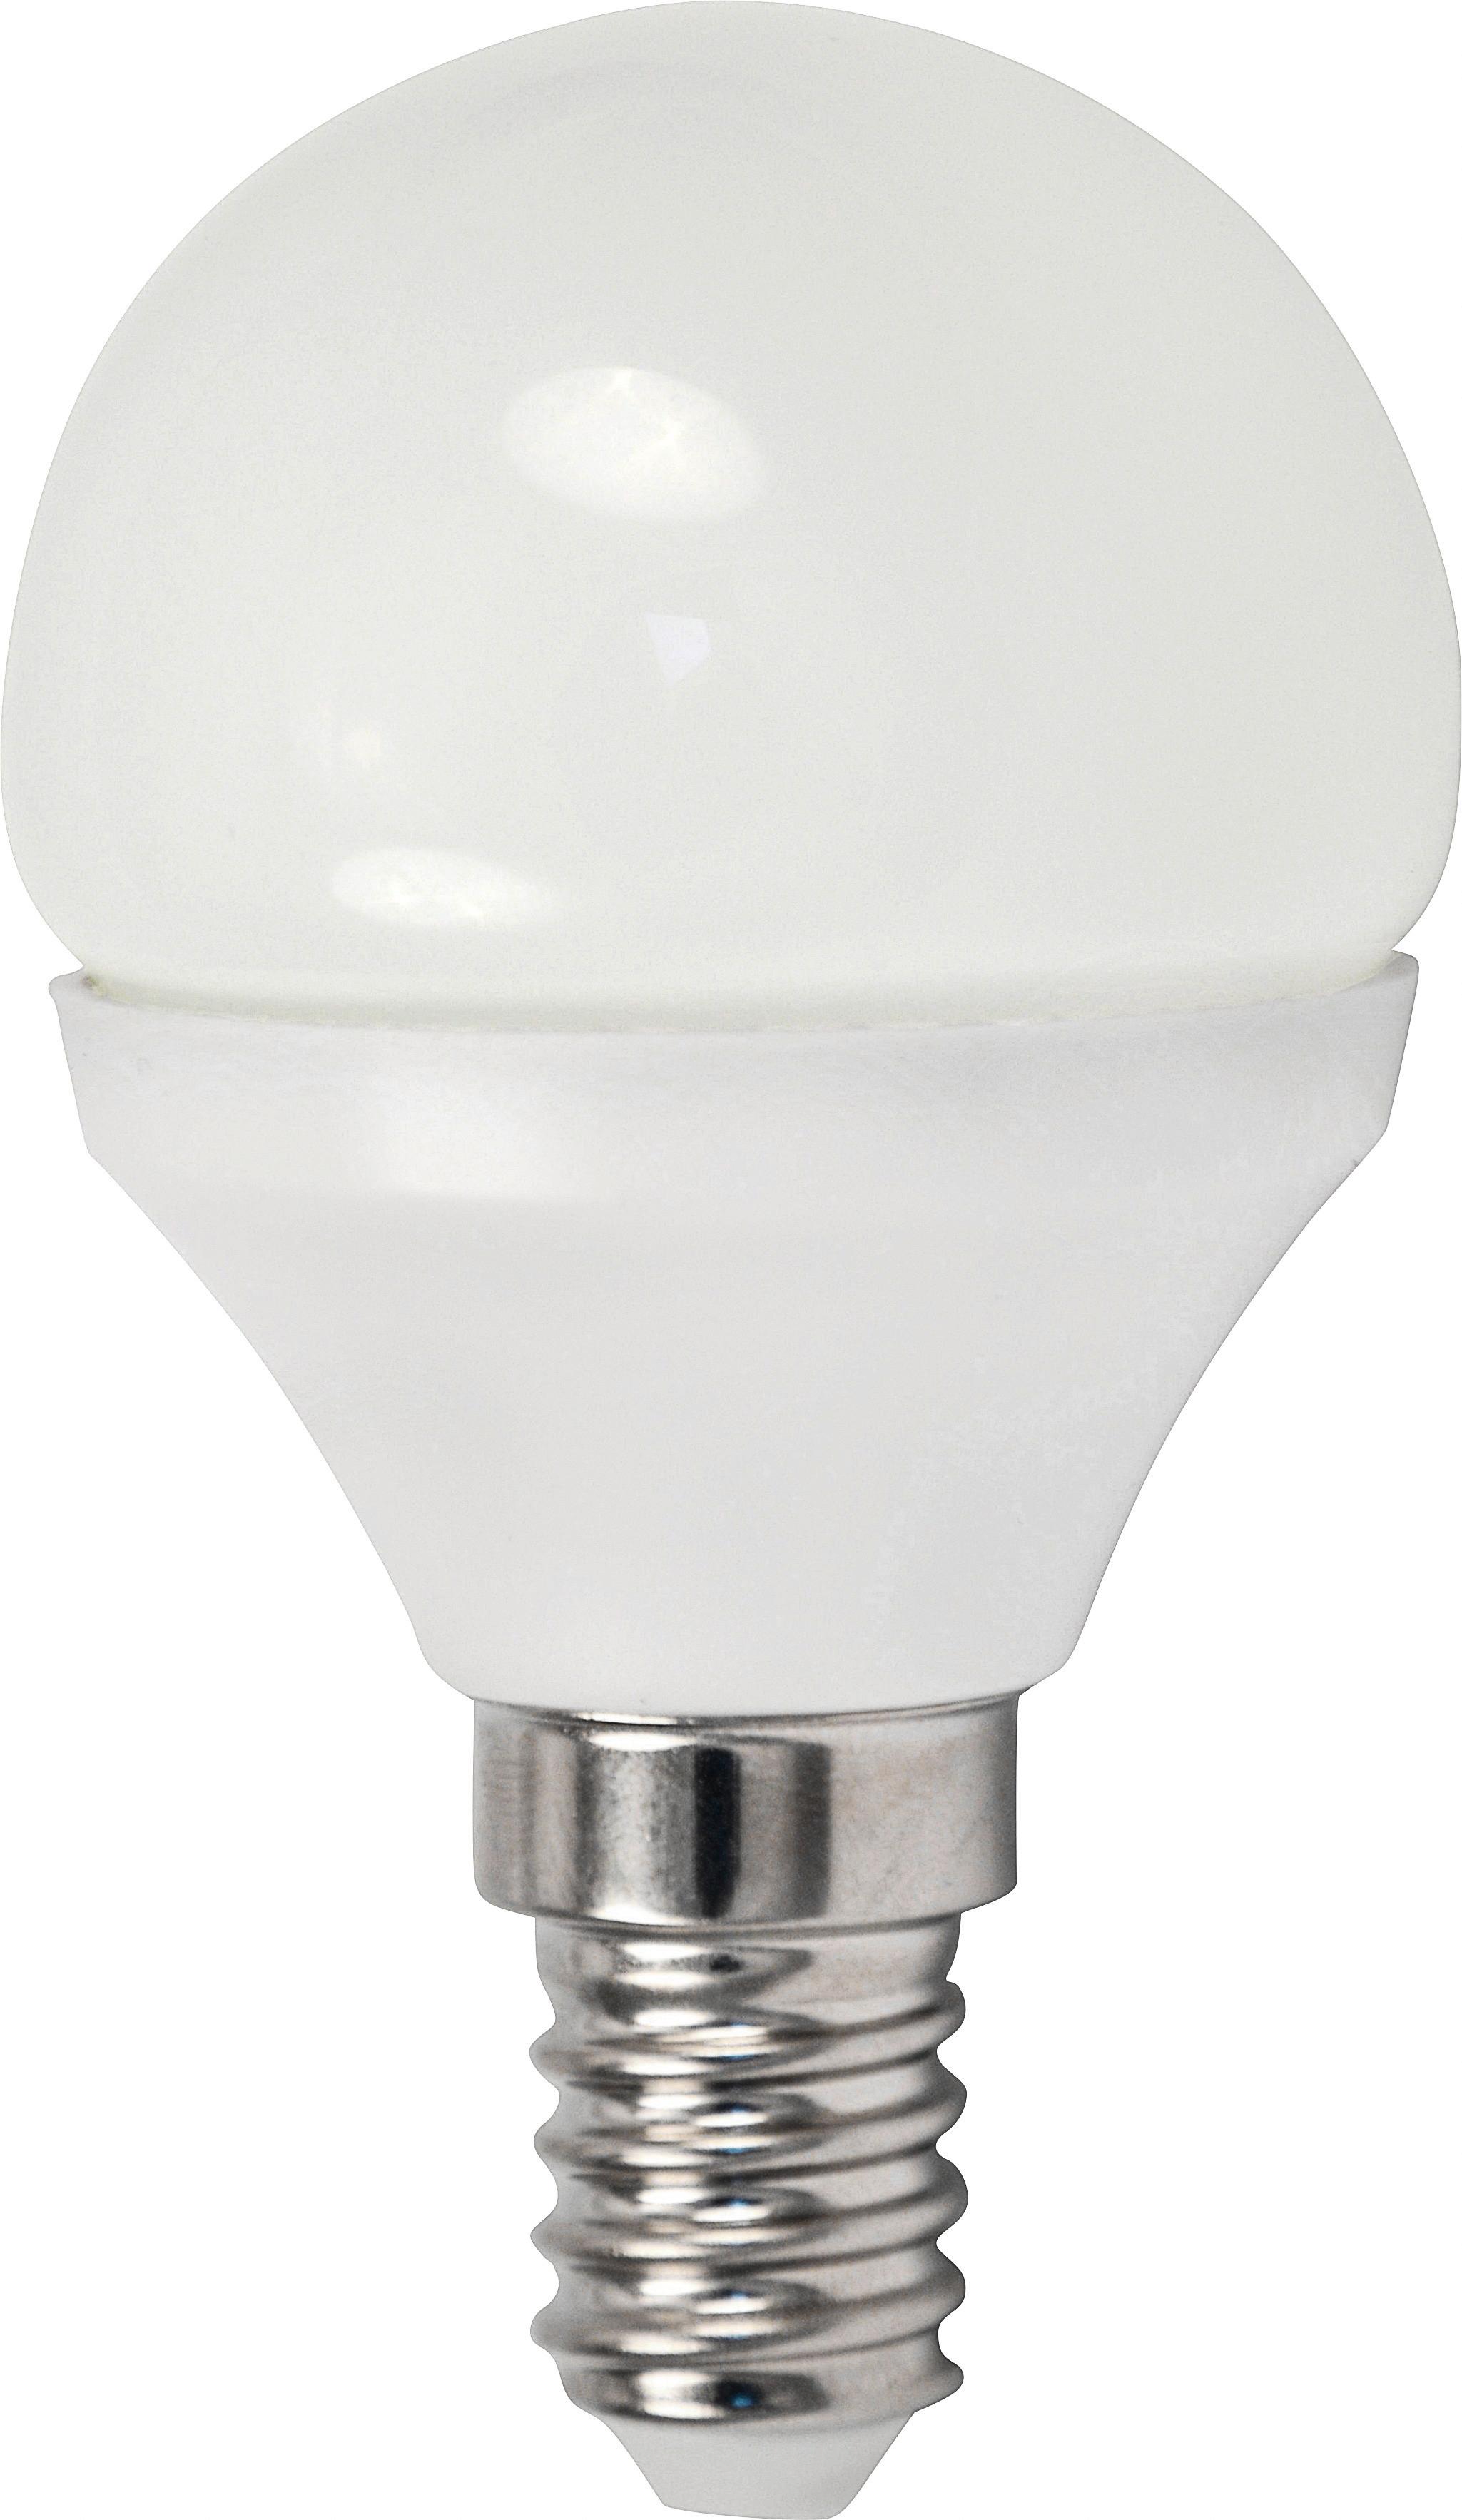 Leuchtmittel C80194 max. 4 Watt - Weiß, Kunststoff/Metall (4,5cm) - Modern Living